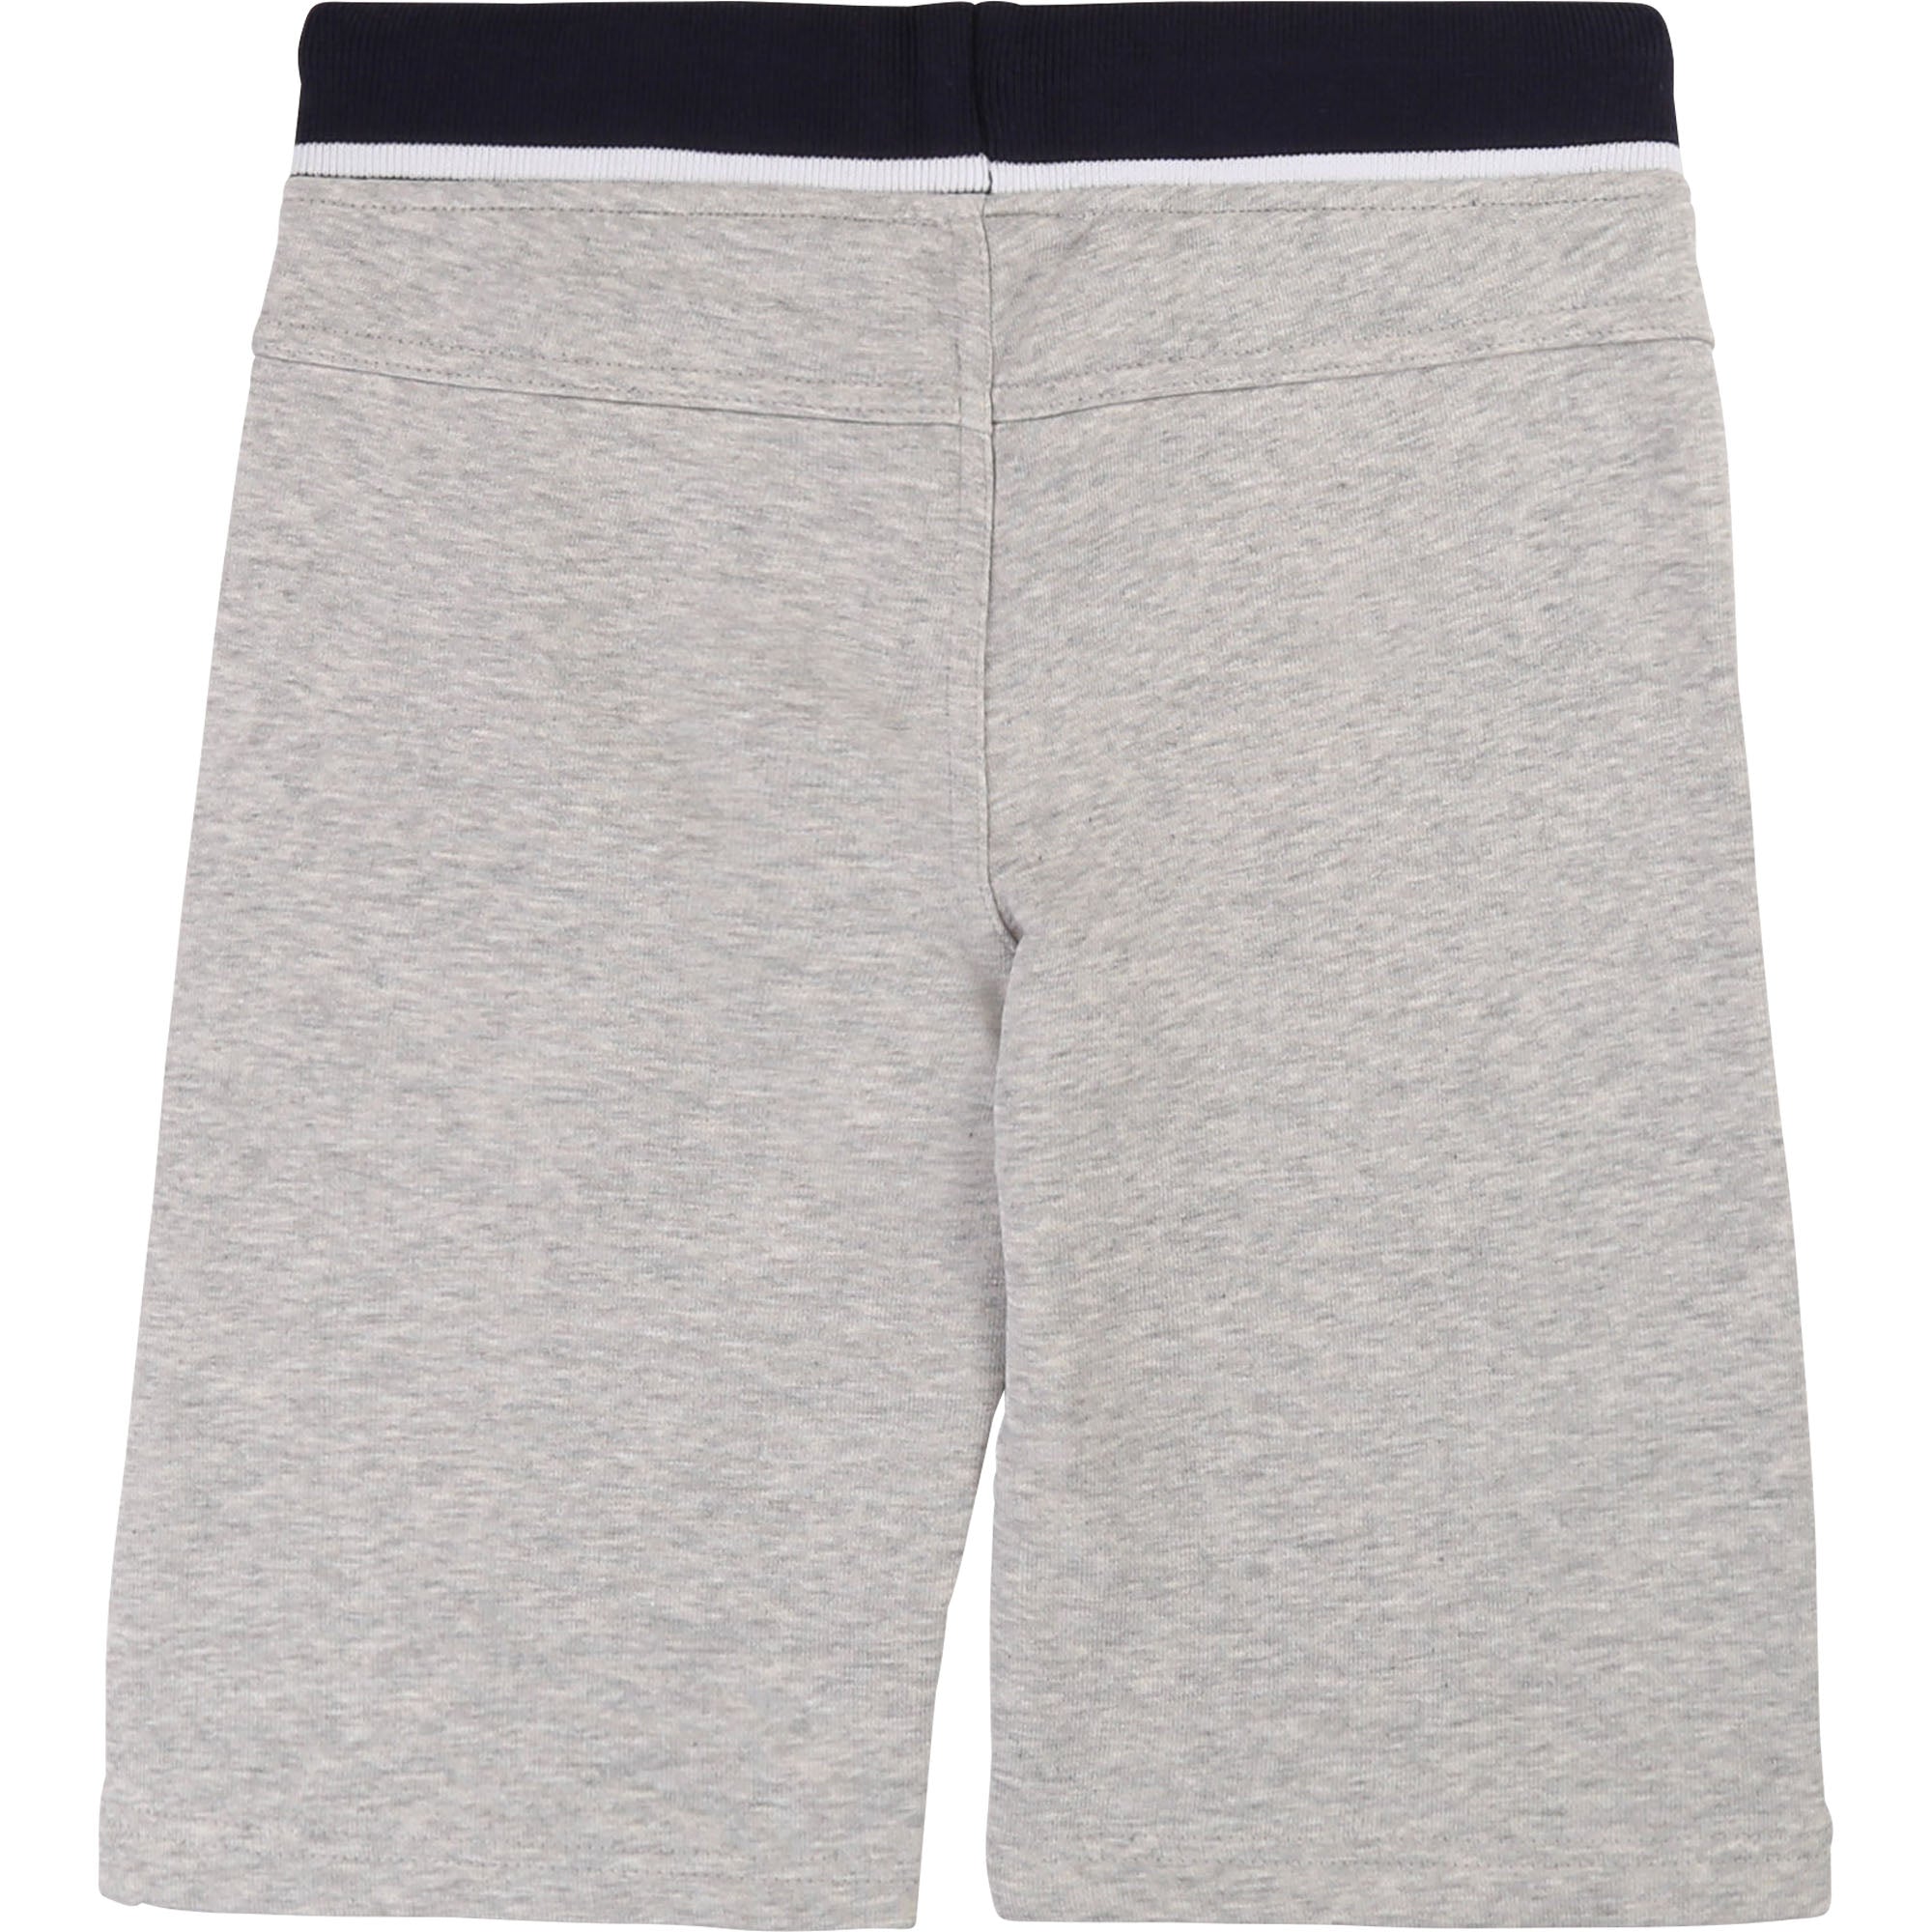 Boys Grey Cotton Shorts